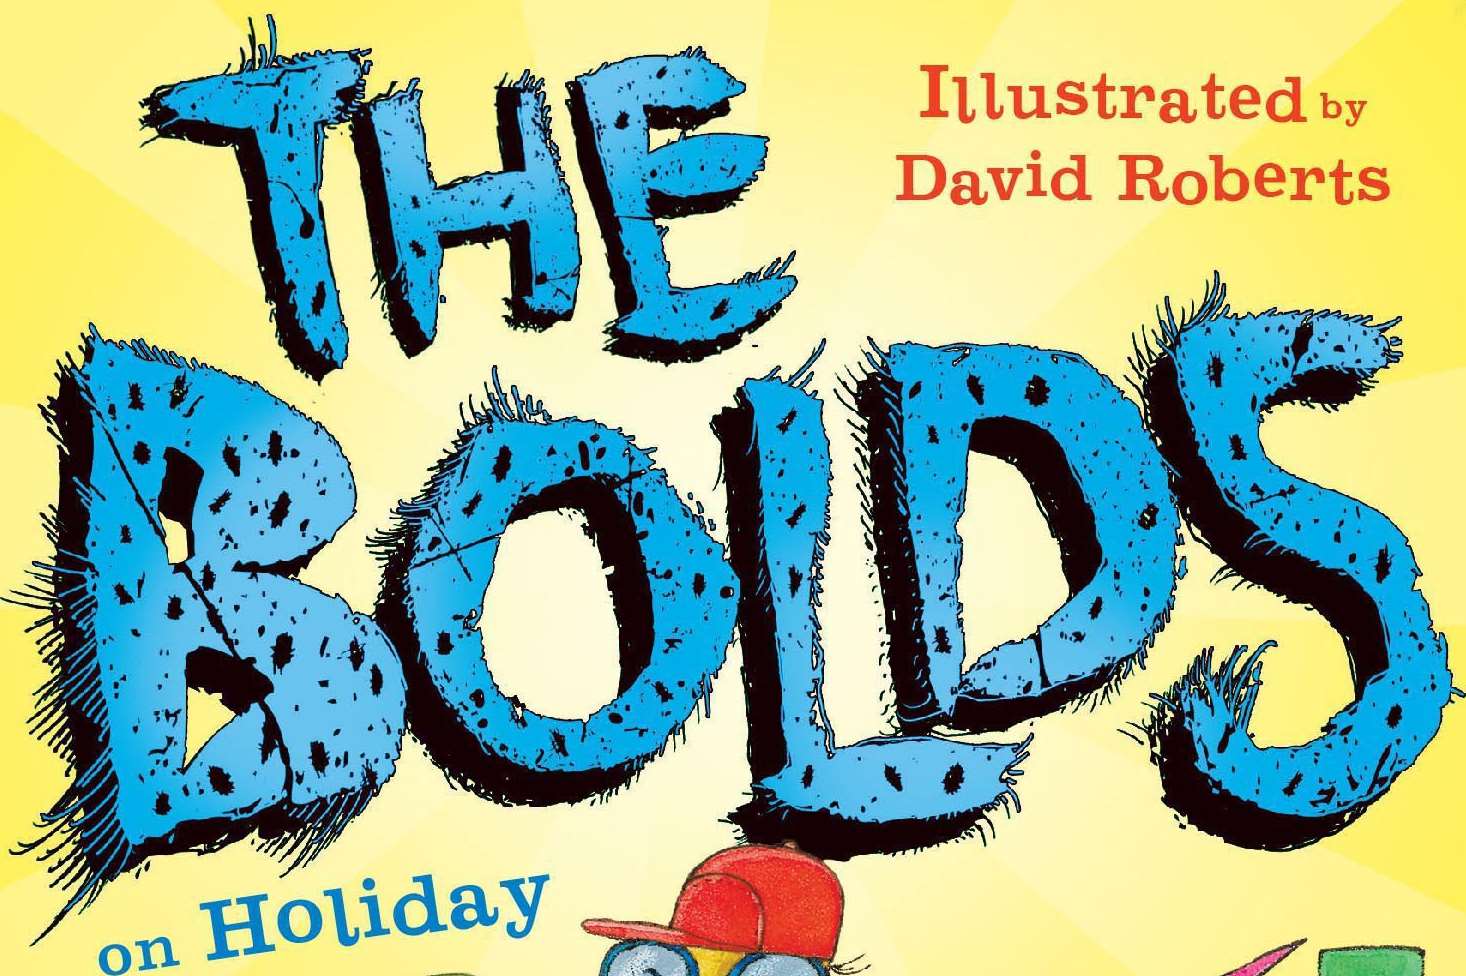 Julian Clary's children's books, The Bolds